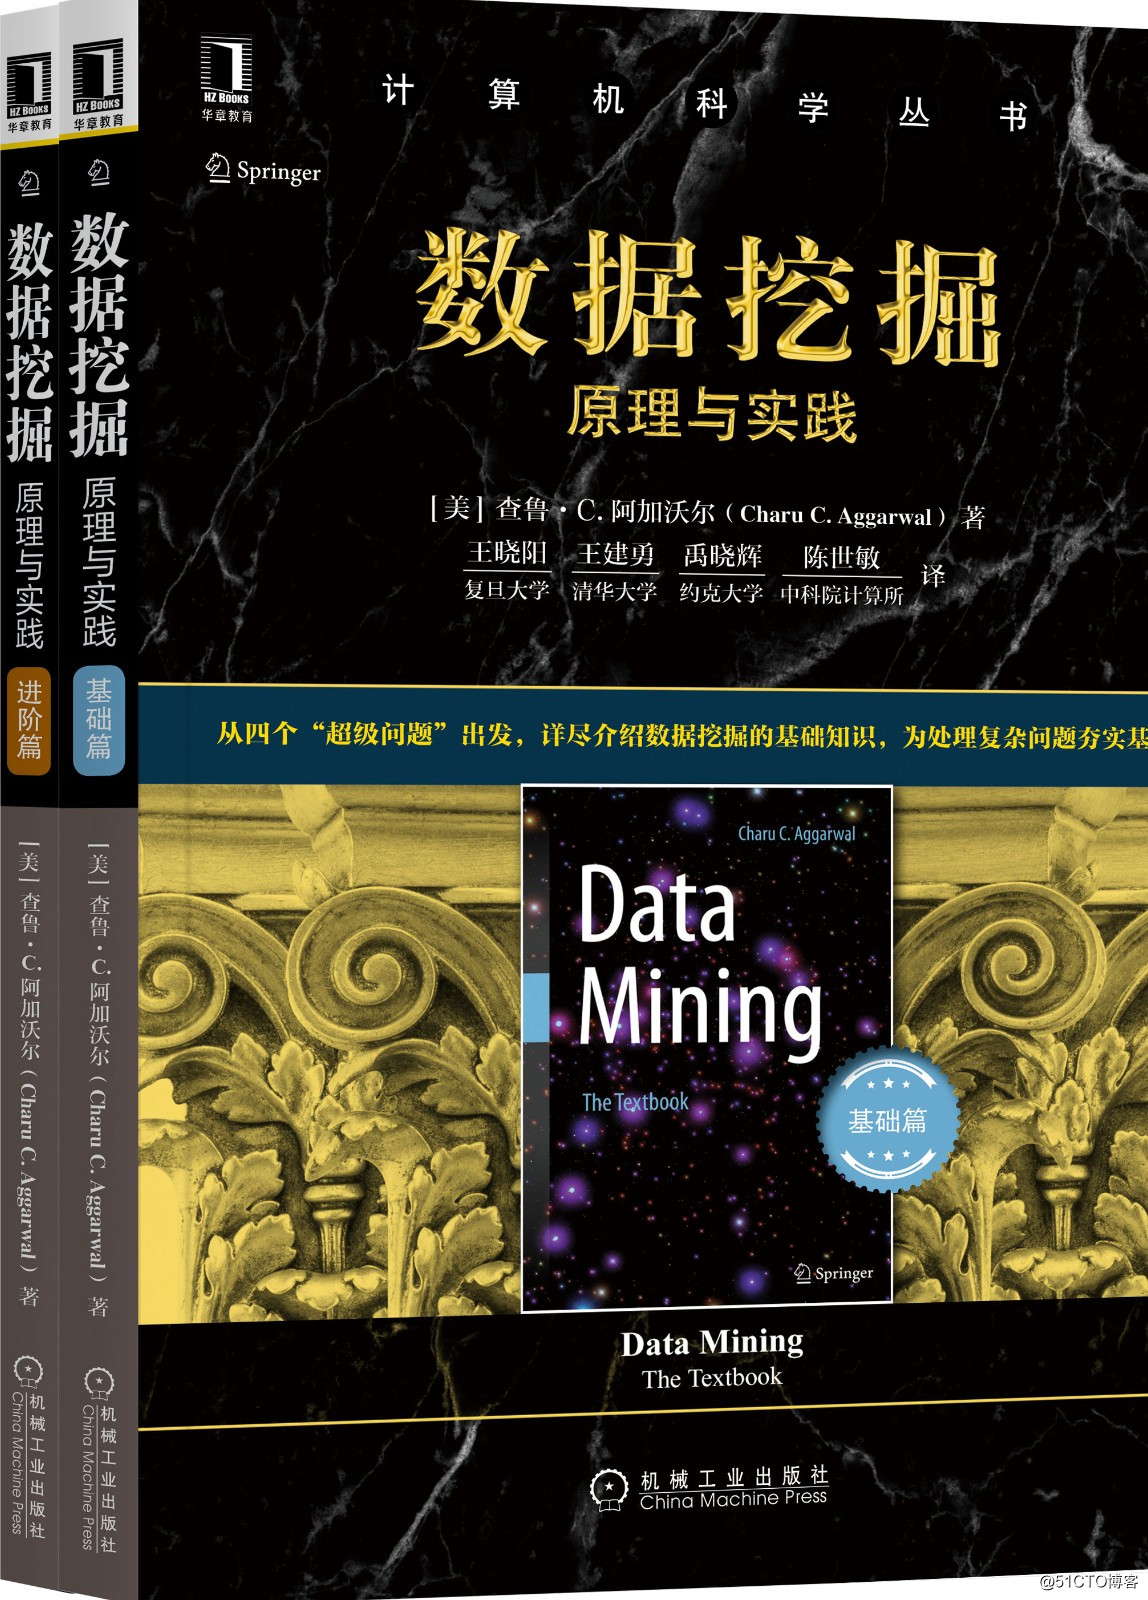 Data Mining: Principles and Practice (Basics) (Advanced)